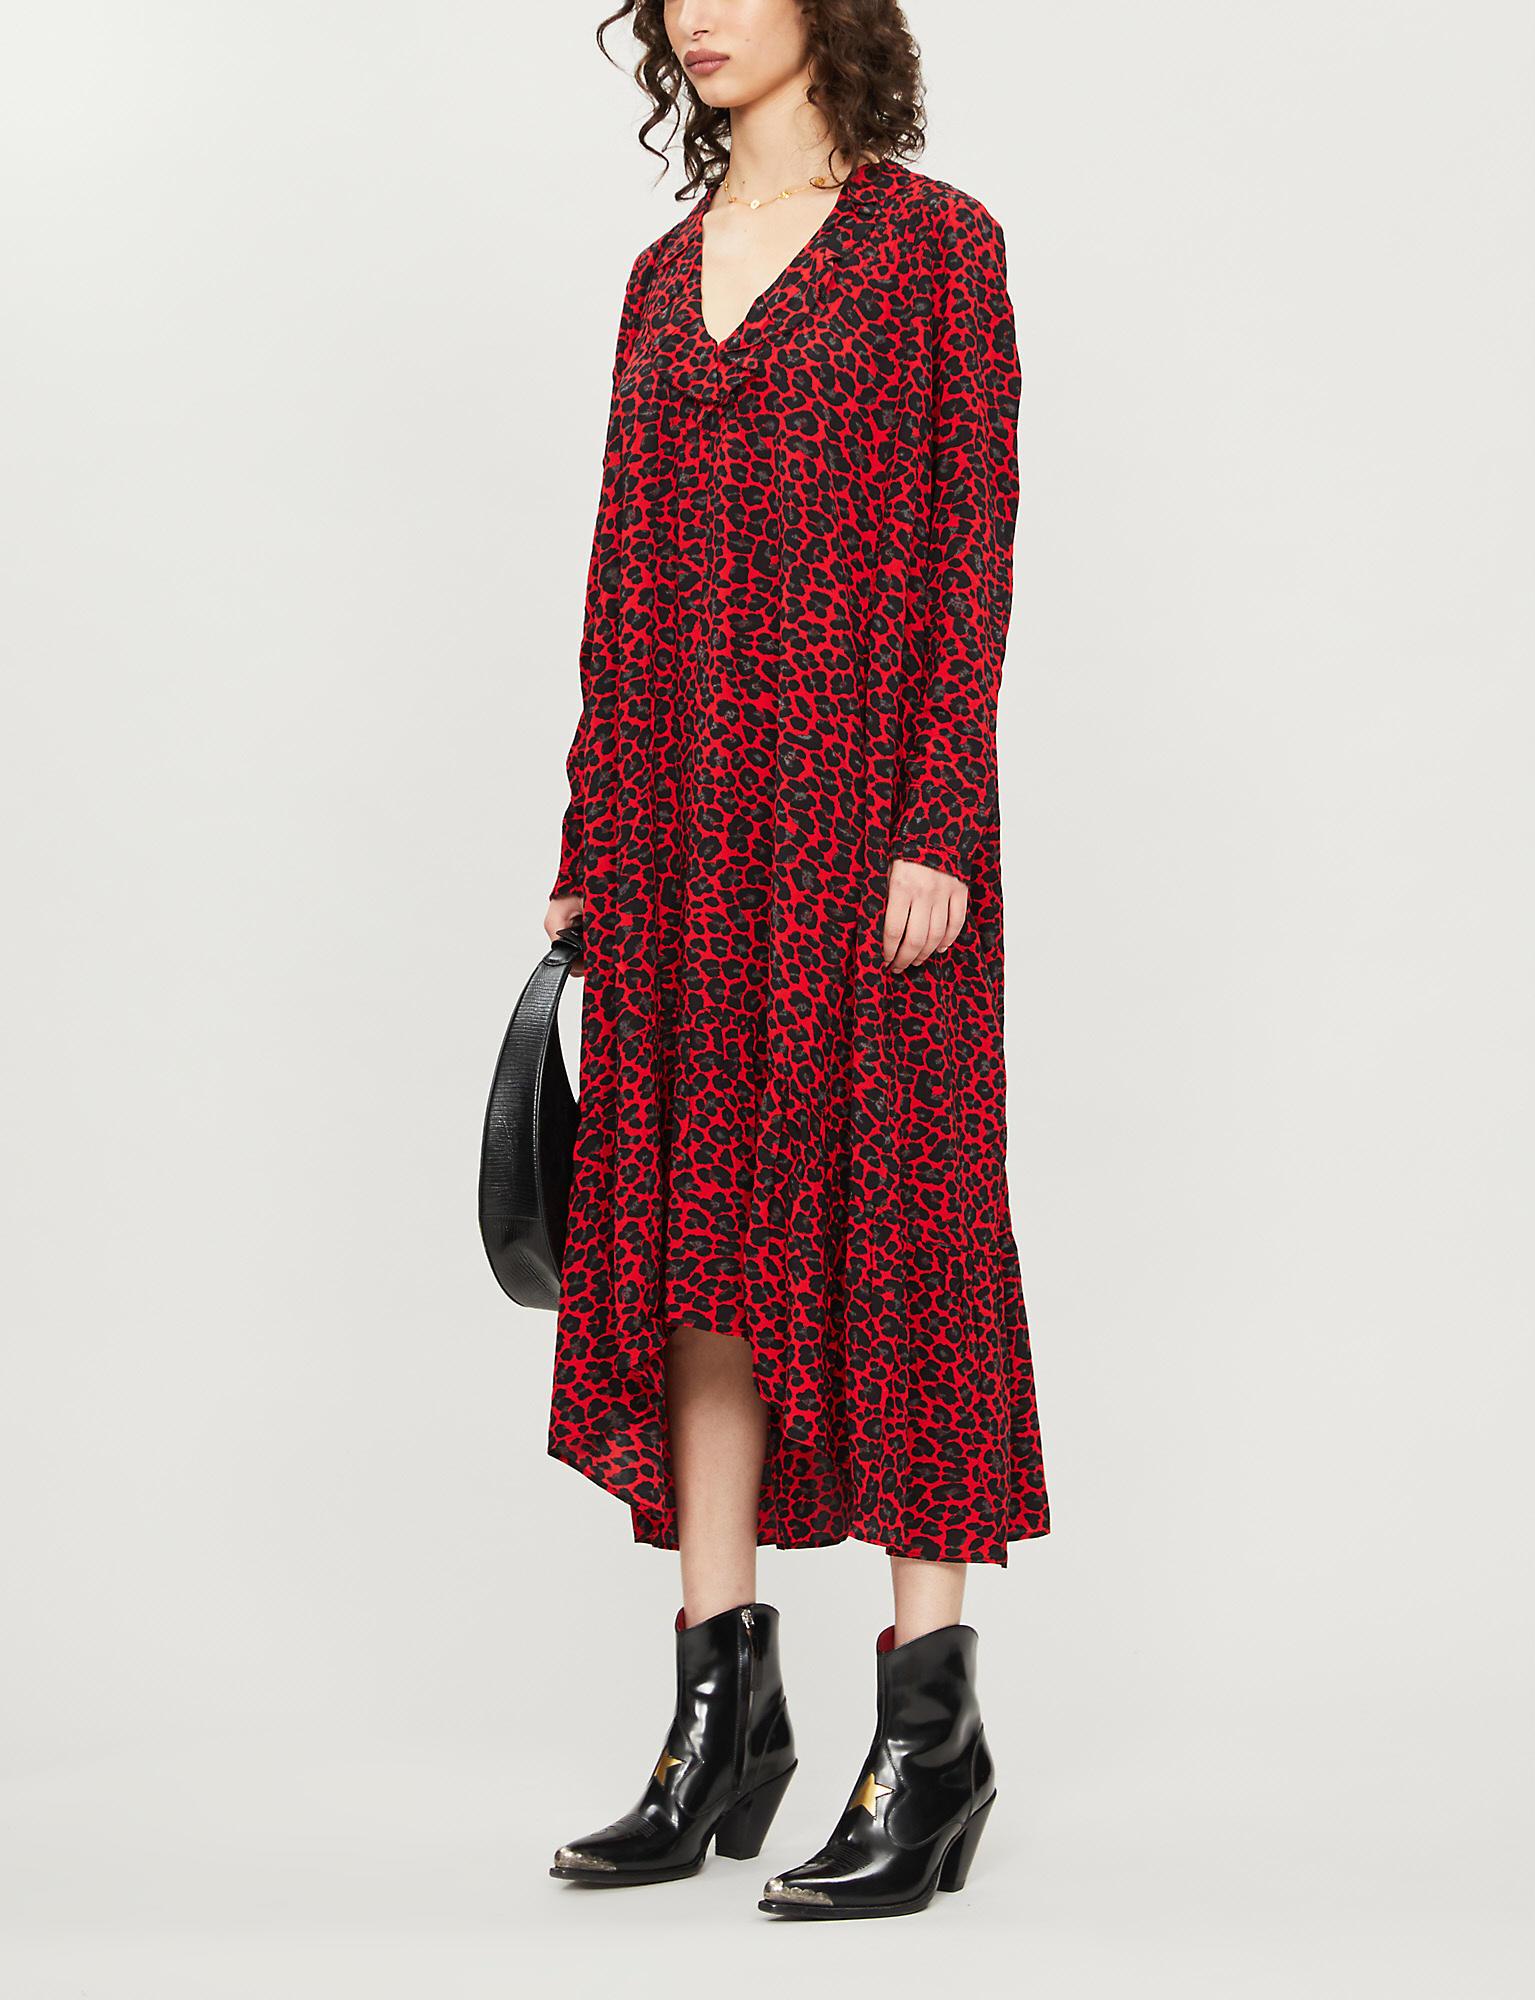 Zadig & Voltaire Rikota Leopard-print Crepe Dress in Red | Lyst